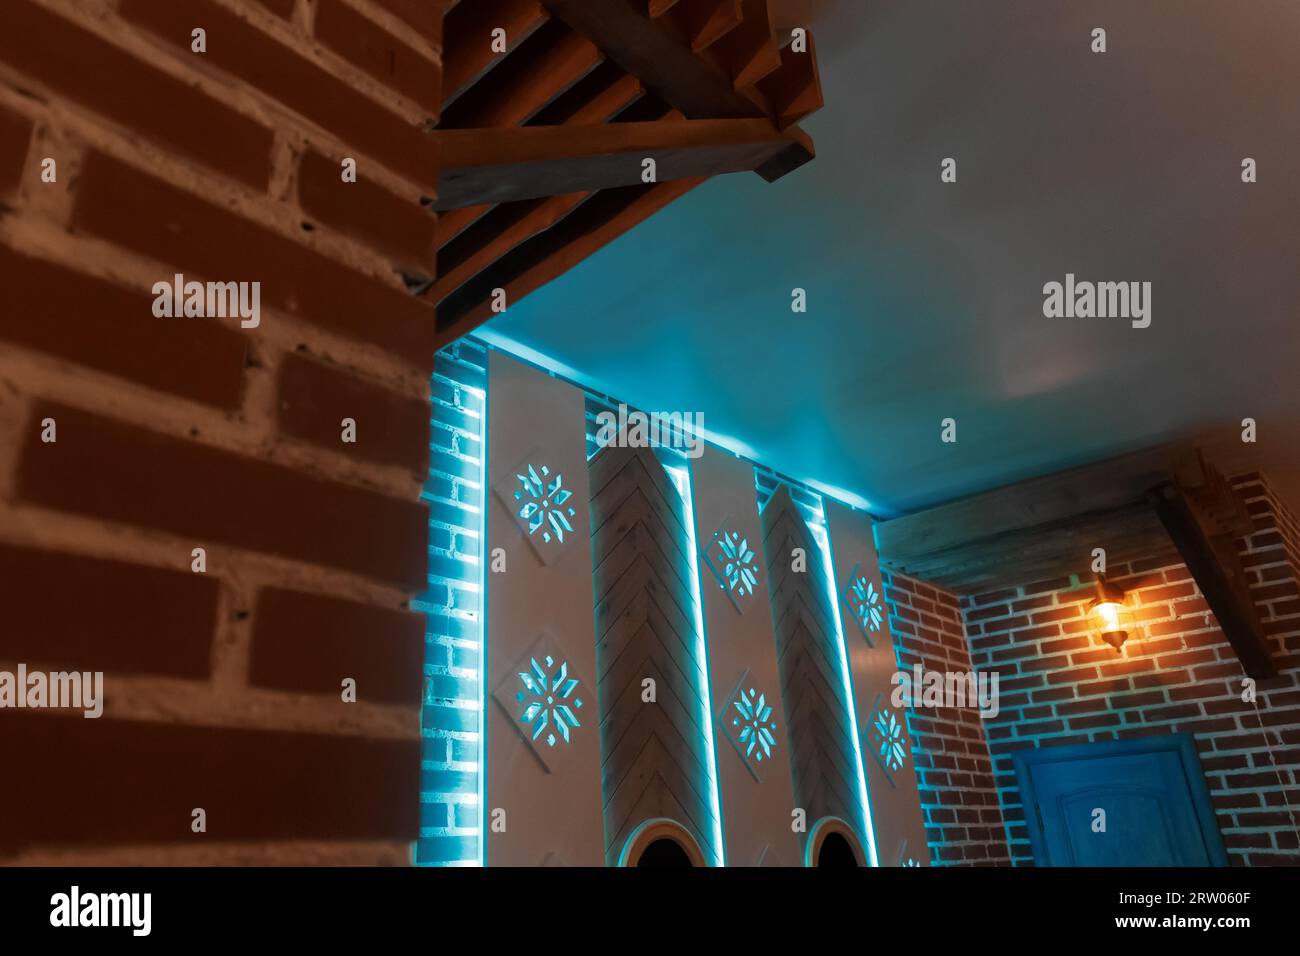 Decorative interior design element with brick walls and neon blue light. Stock Photo